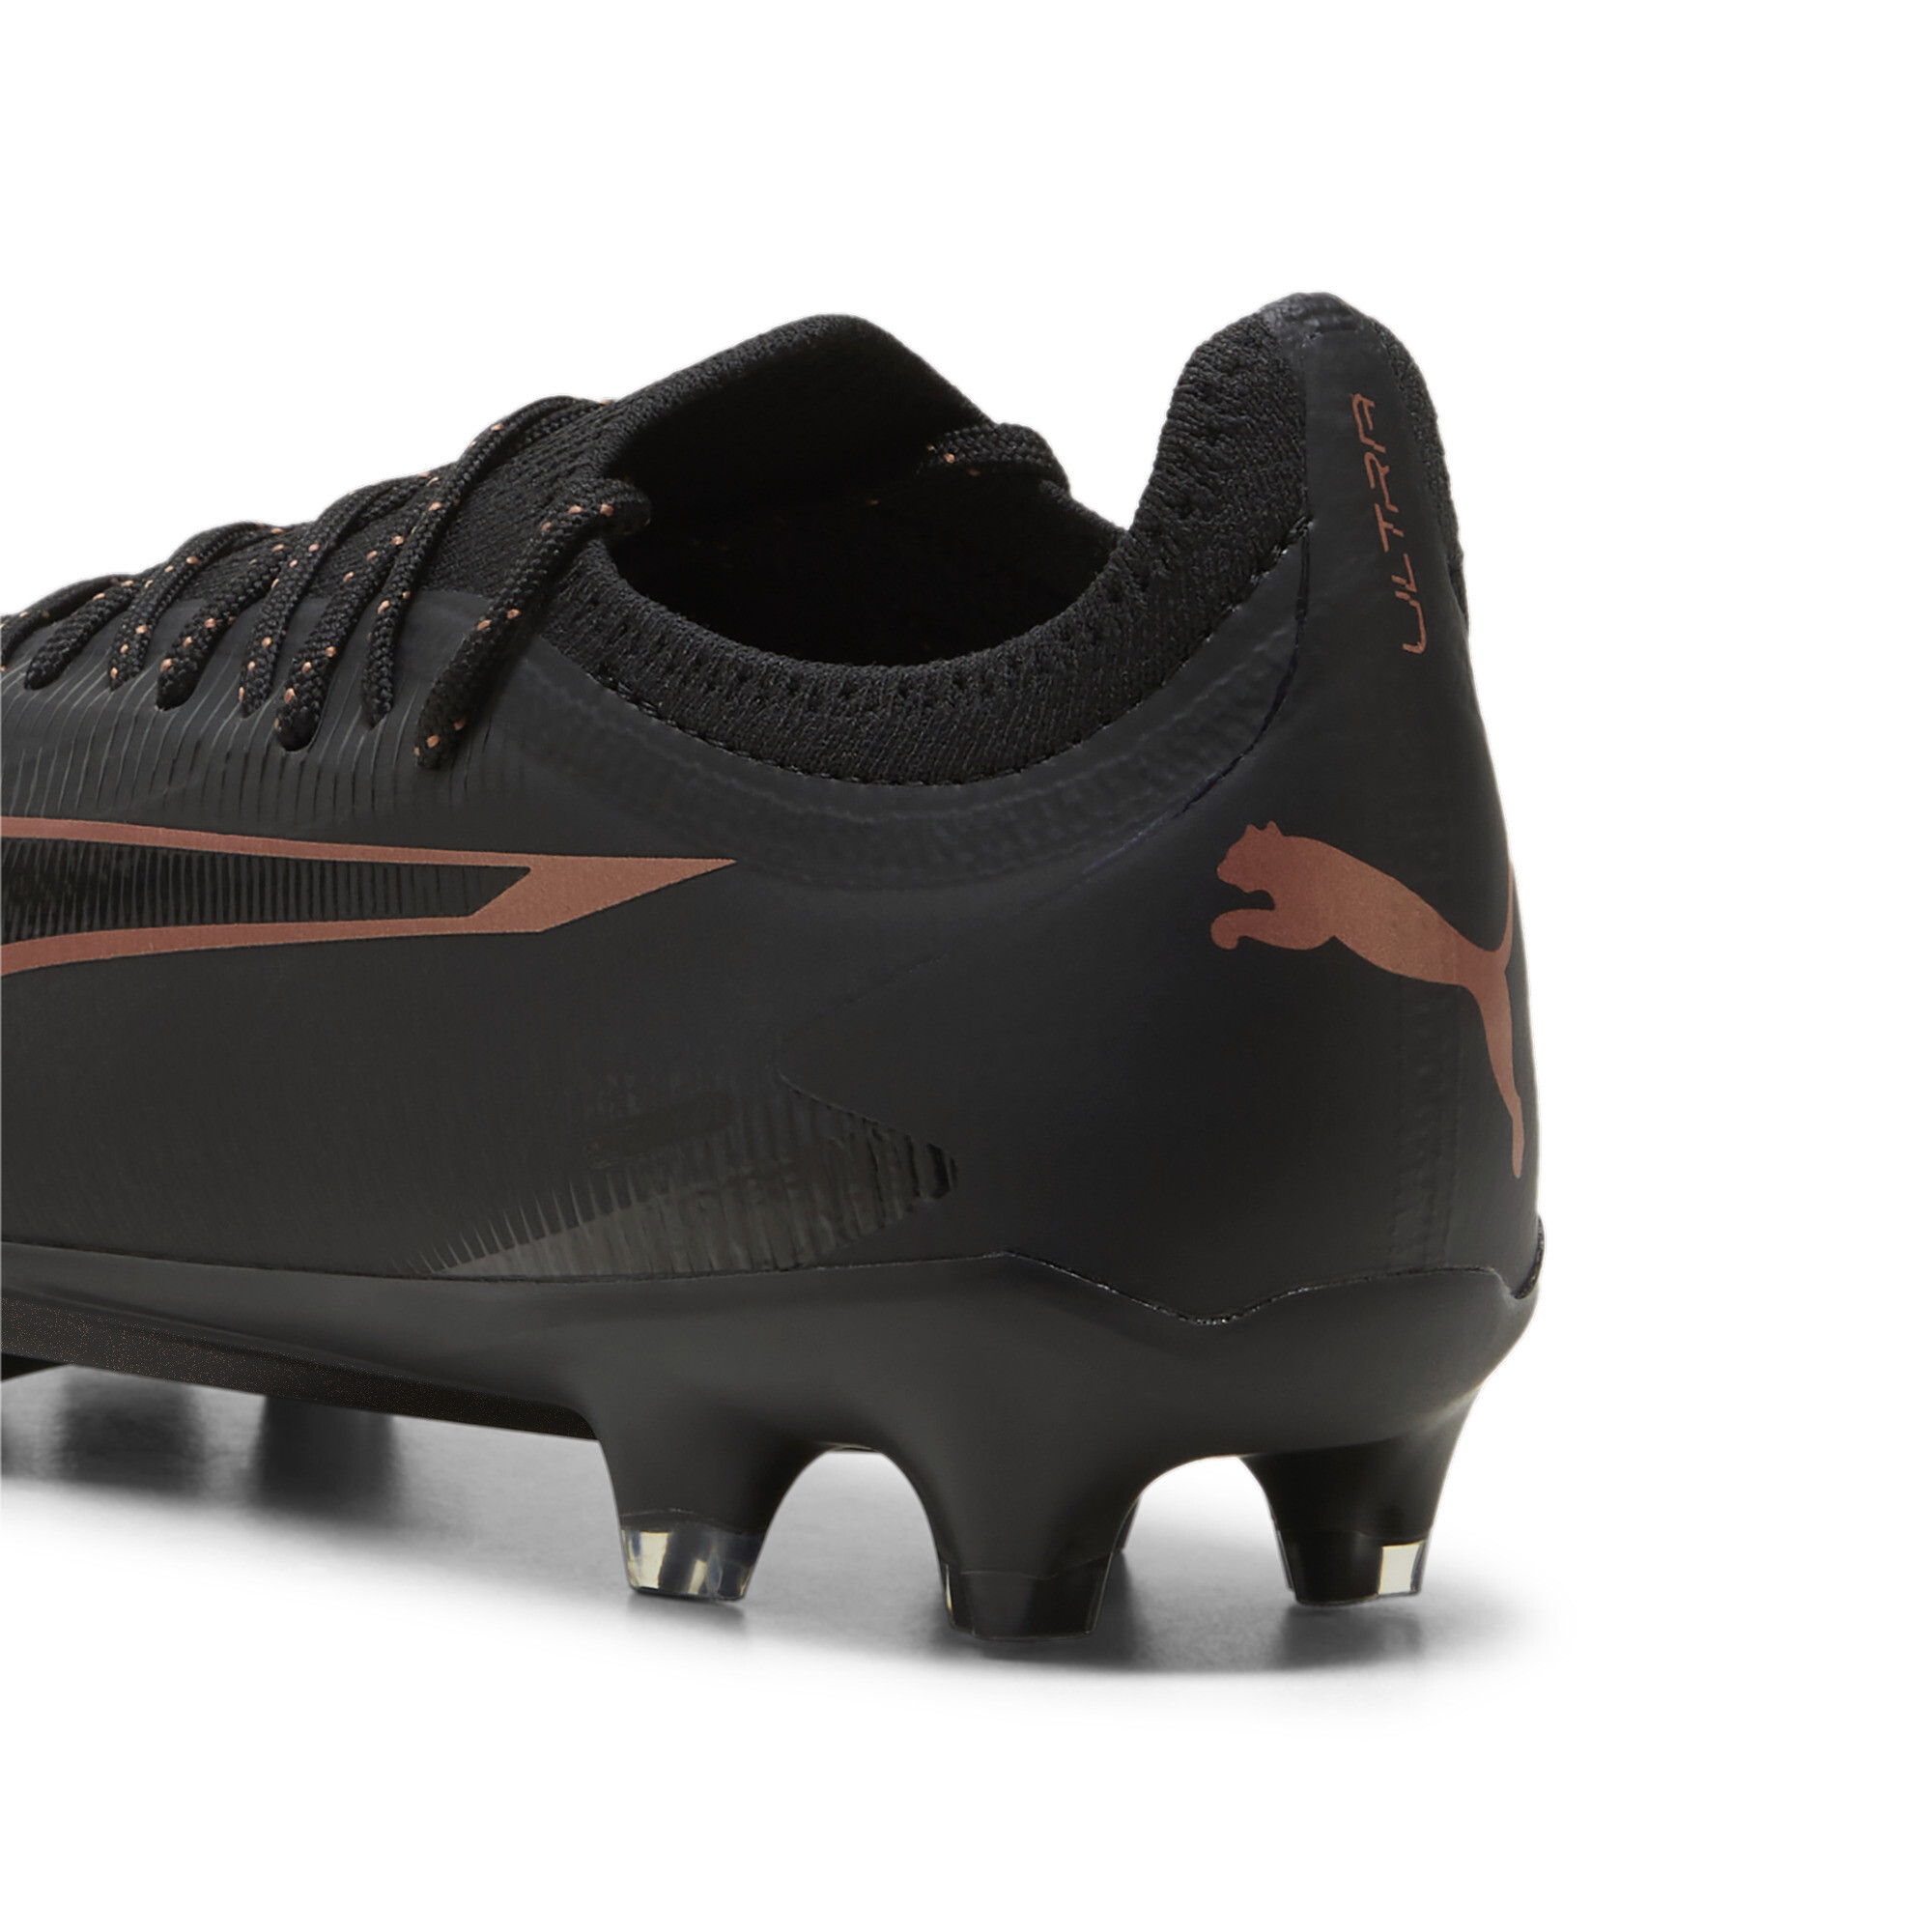 Men's PUMA ULTRA ULTIMATE FG/AG Football Boots In Black, Size EU 44.5